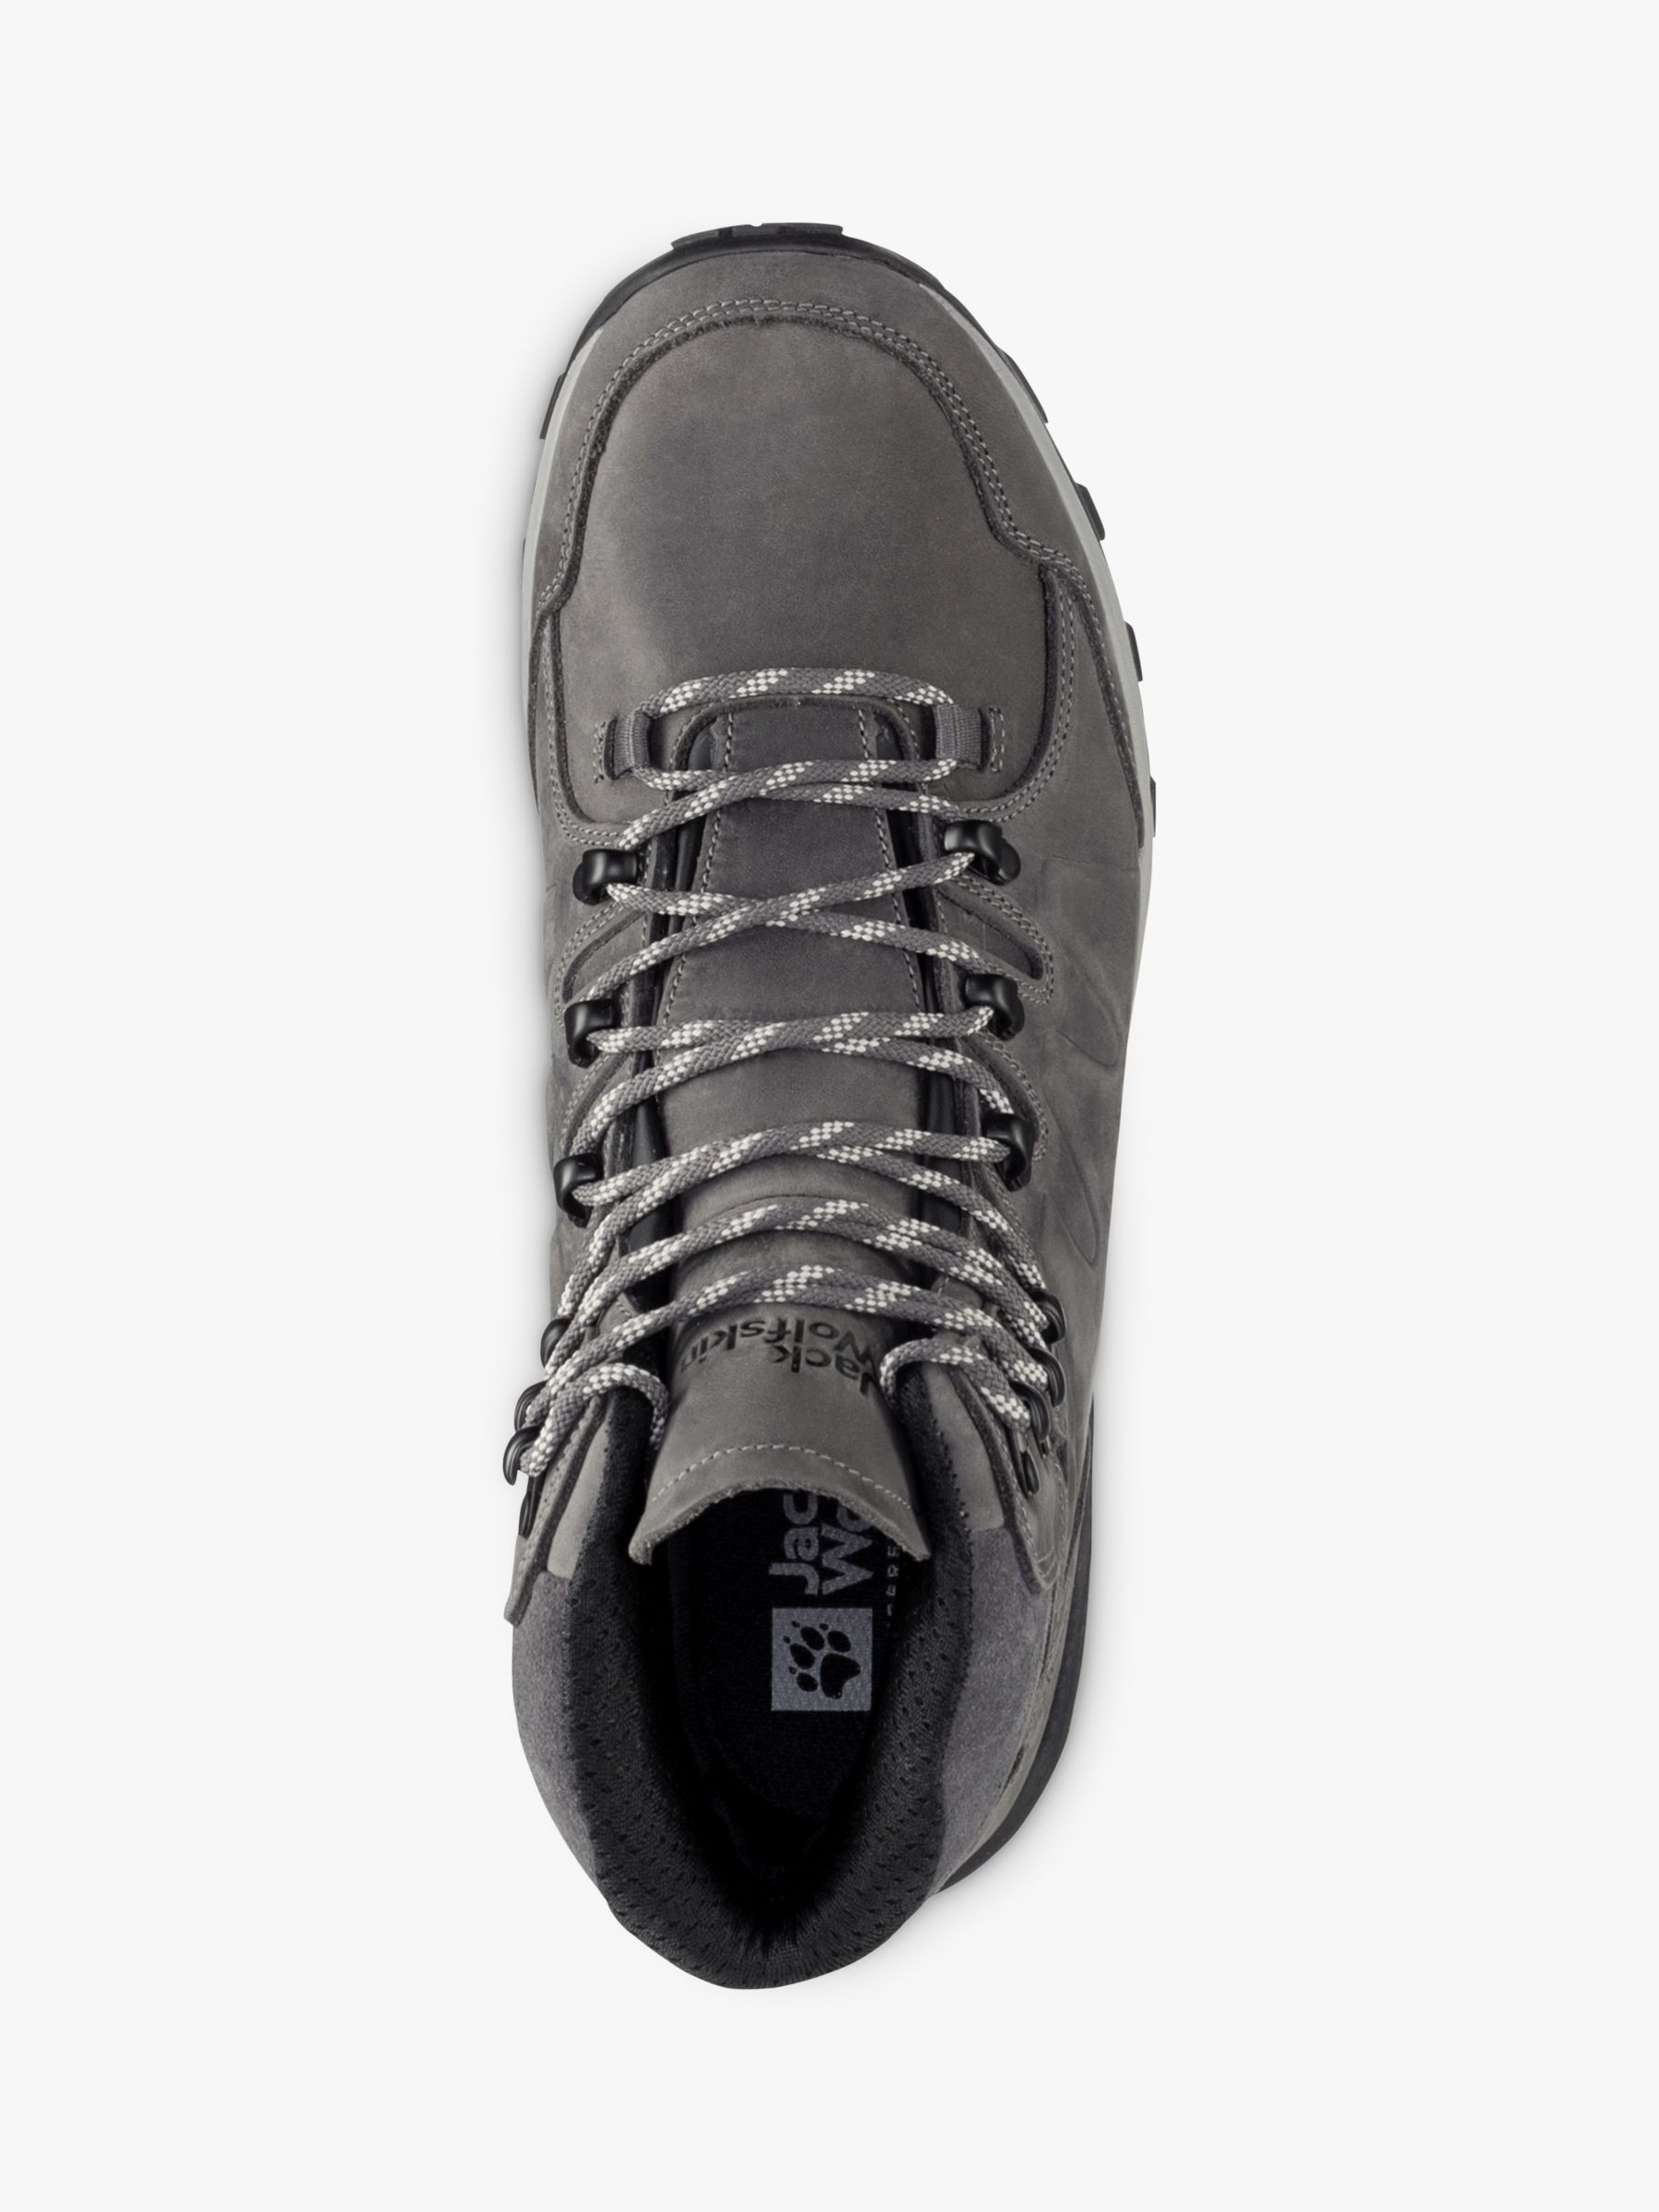 Jack Wolfskin Refugio Prime Texapore Mid Men's Walking Shoes, Slate Grey, 11